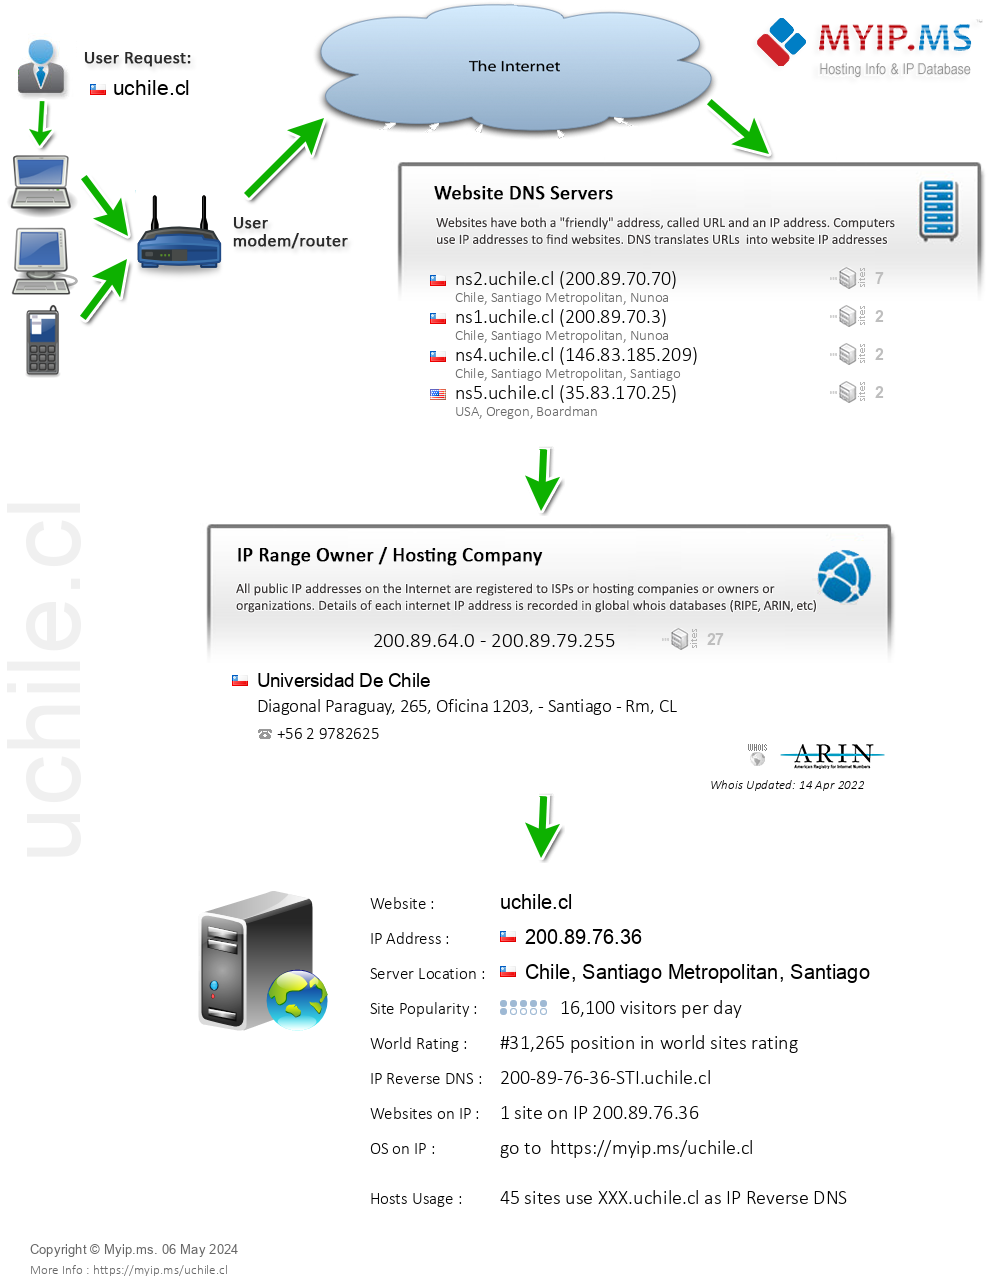 Uchile.cl - Website Hosting Visual IP Diagram